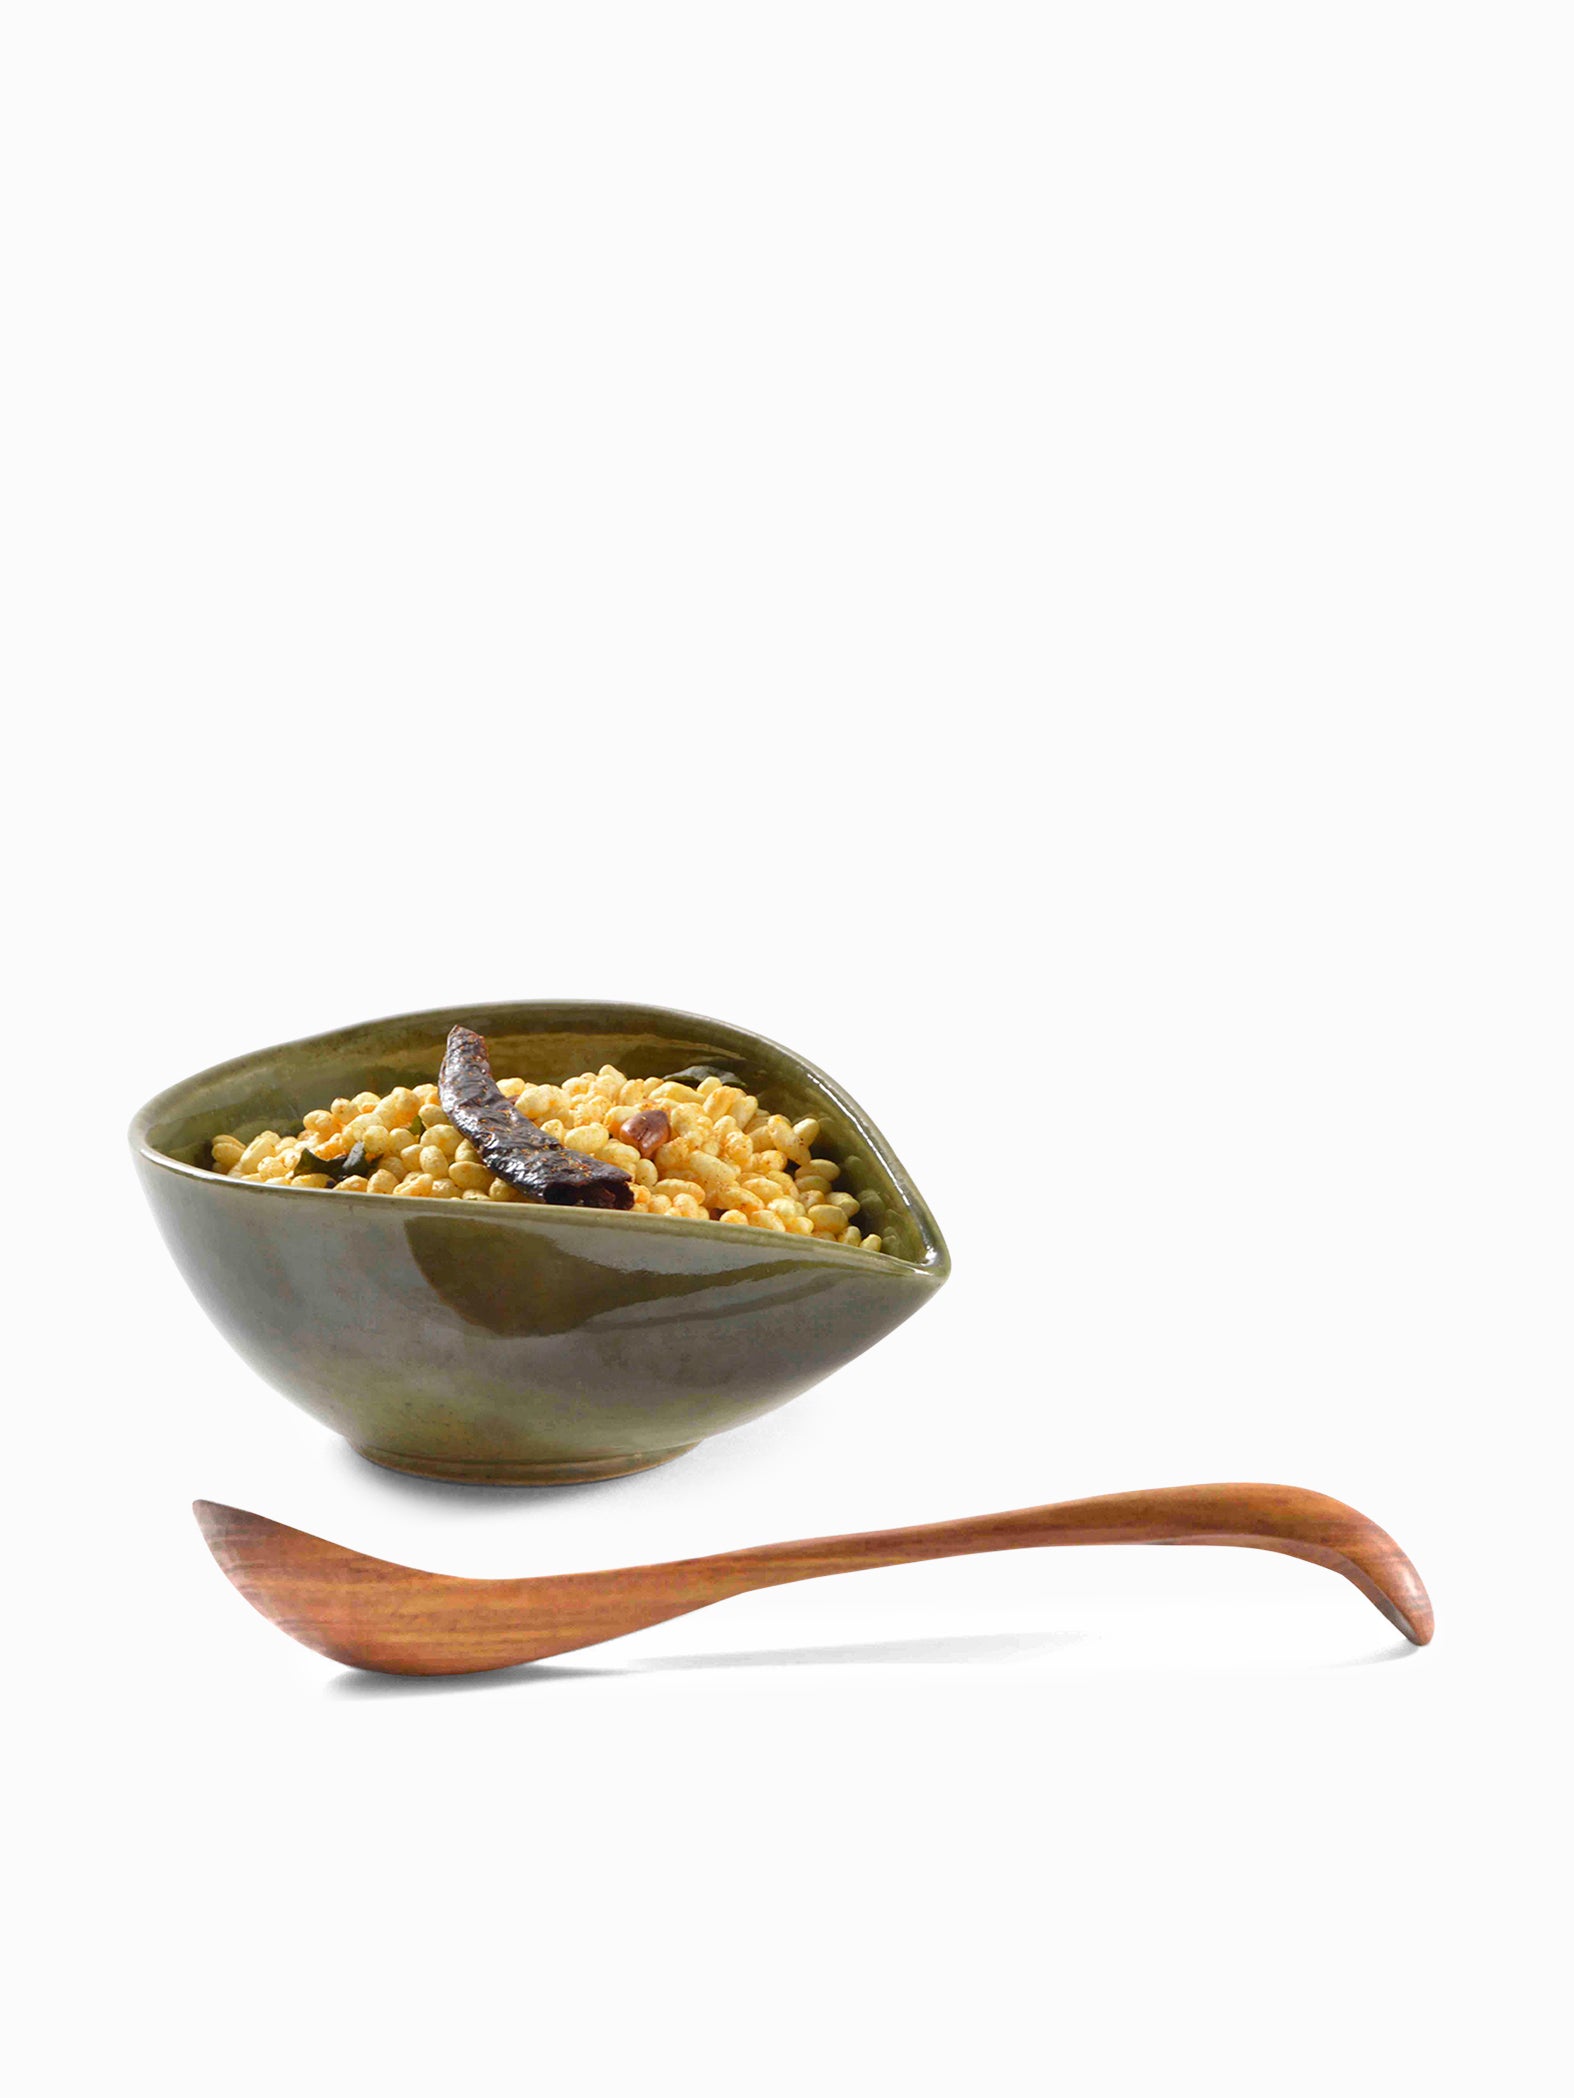 Boondi Snack Bowl & Spoon by AnanTaya